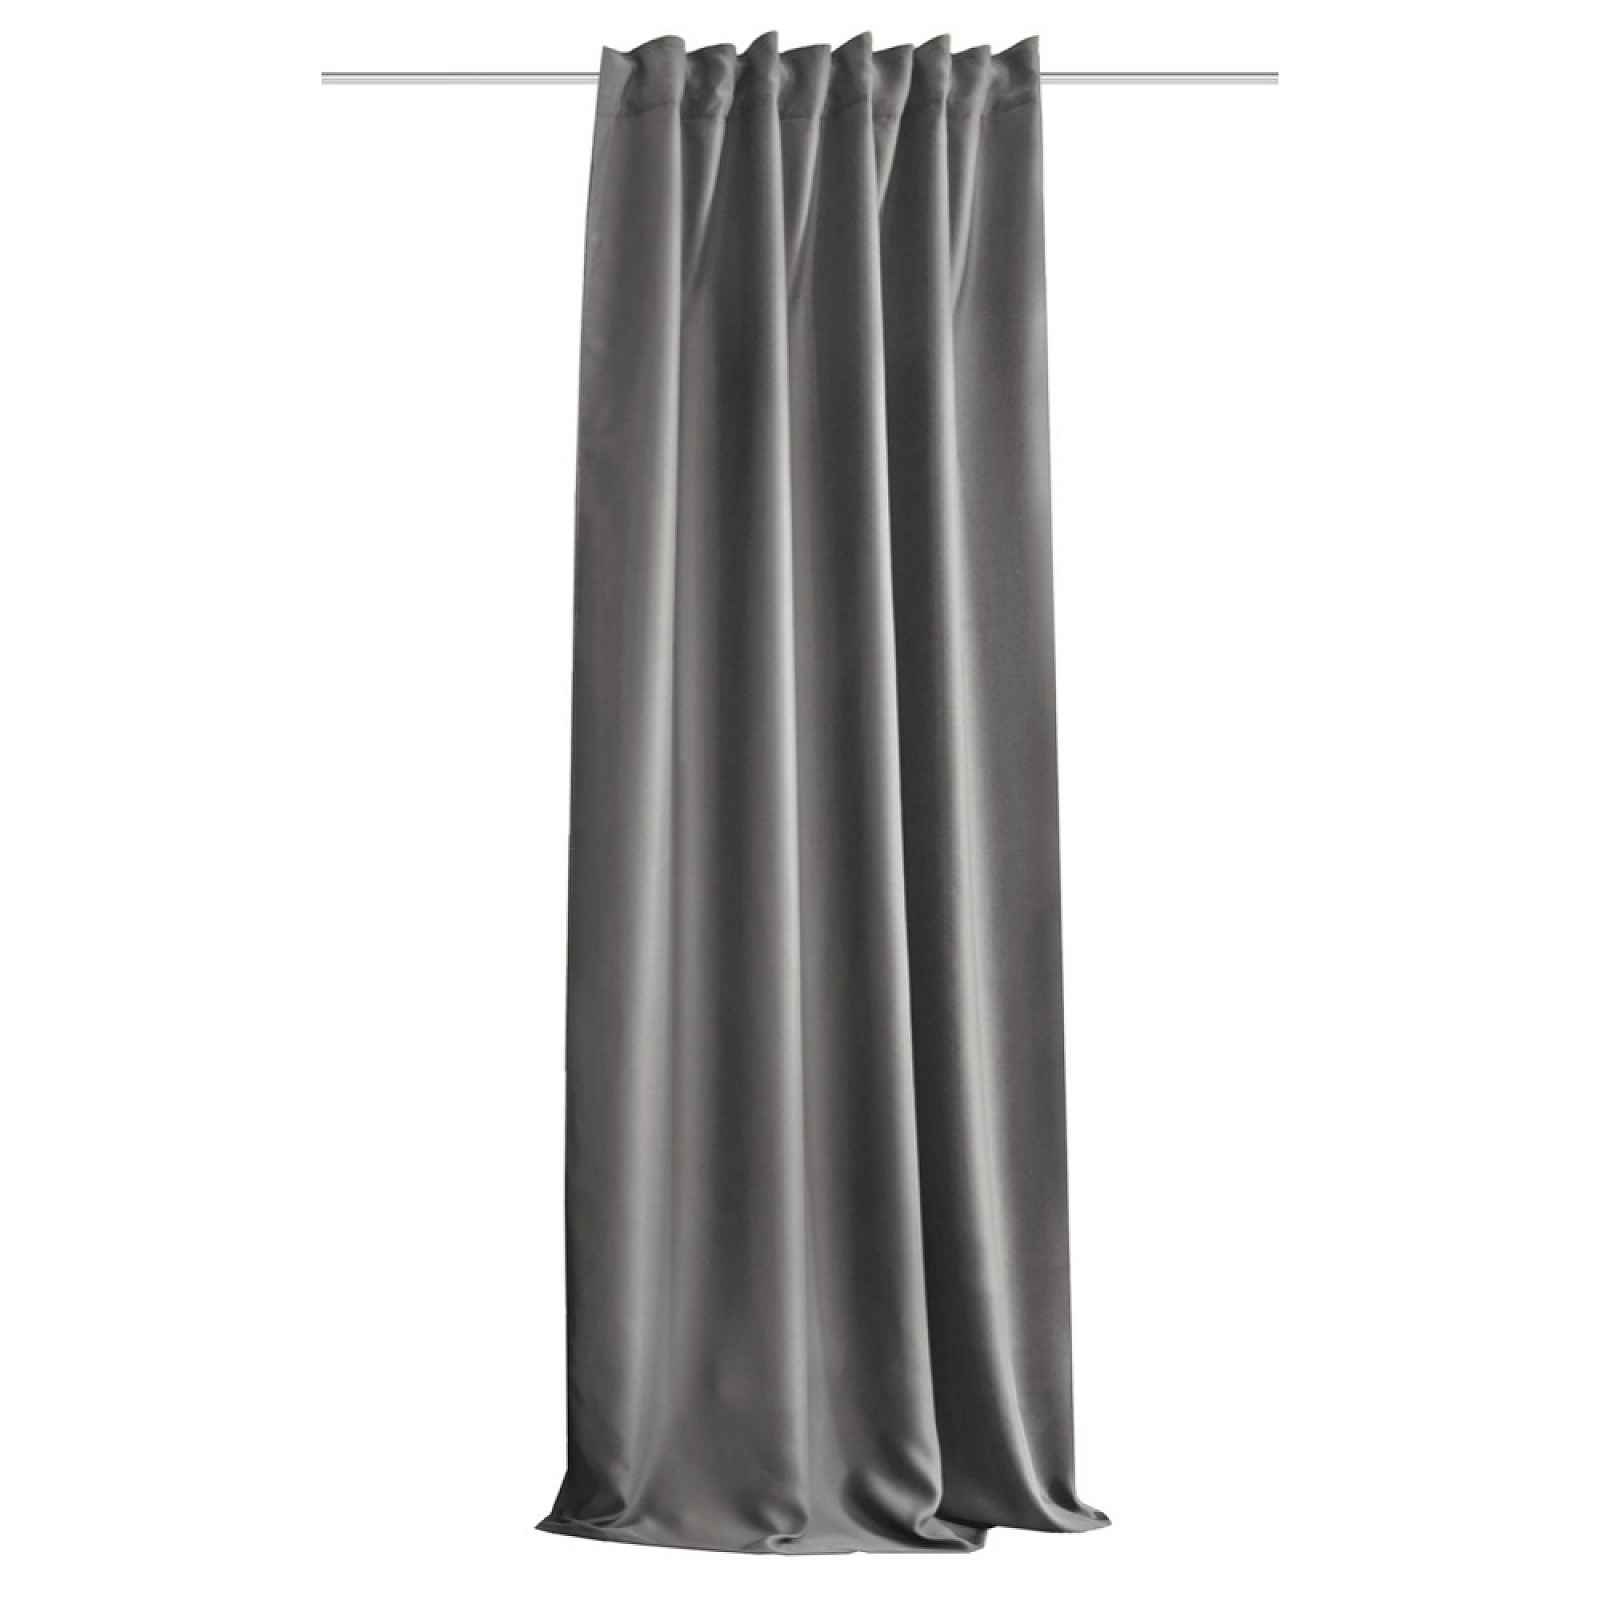 Hotový závěs Hamo šedý, 135x245 cm, 1 ks